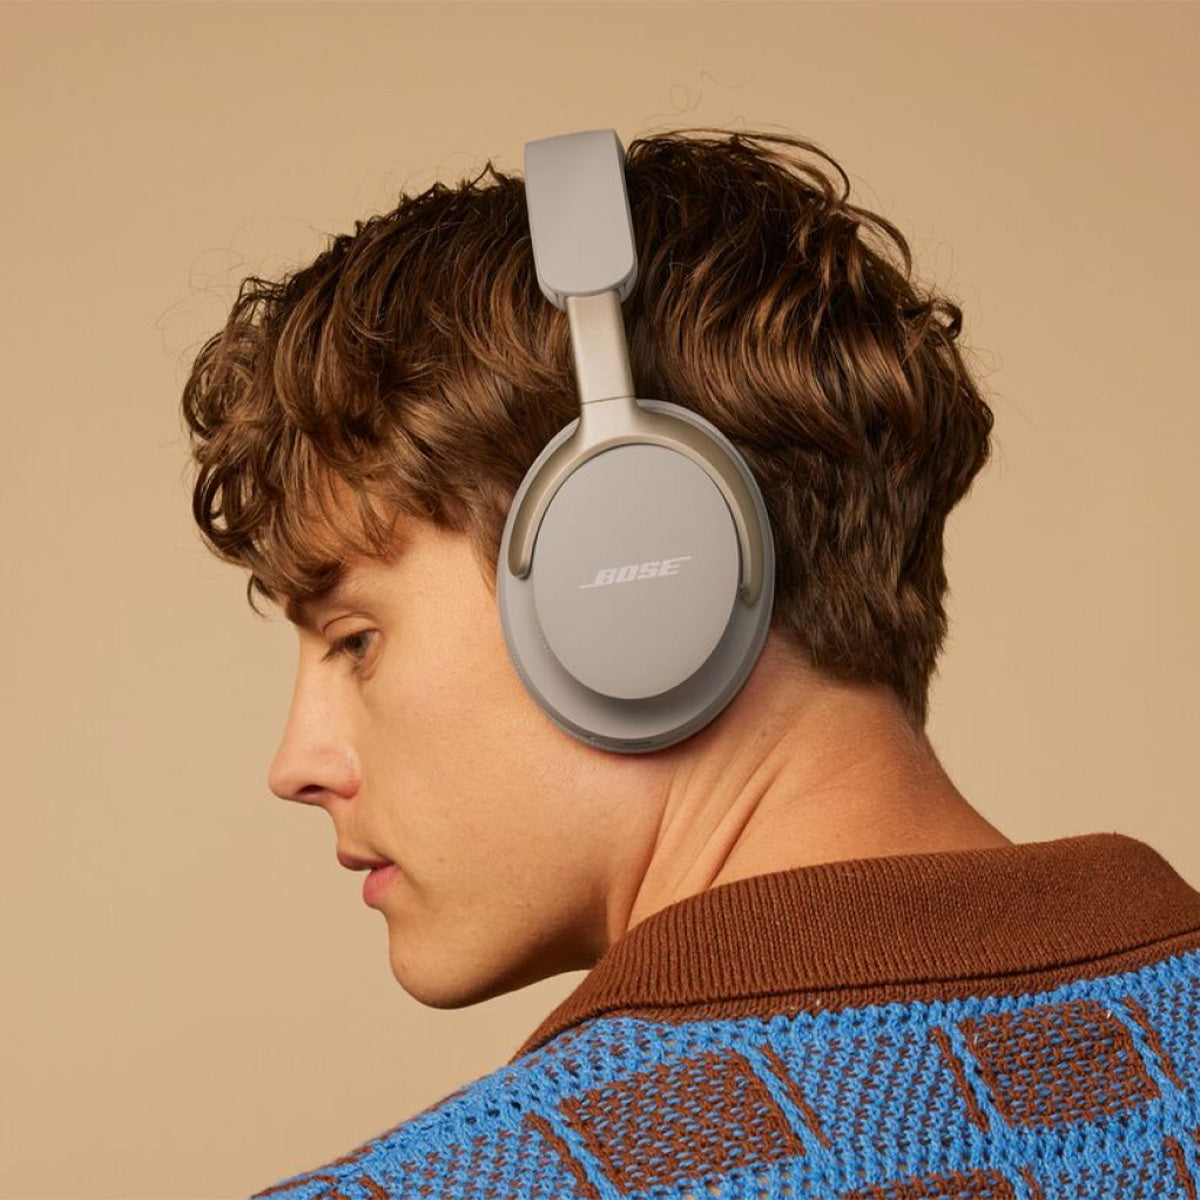 Bose QuietComfort Ultra Wireless Noise Cancelling Headphones (Sandstone)